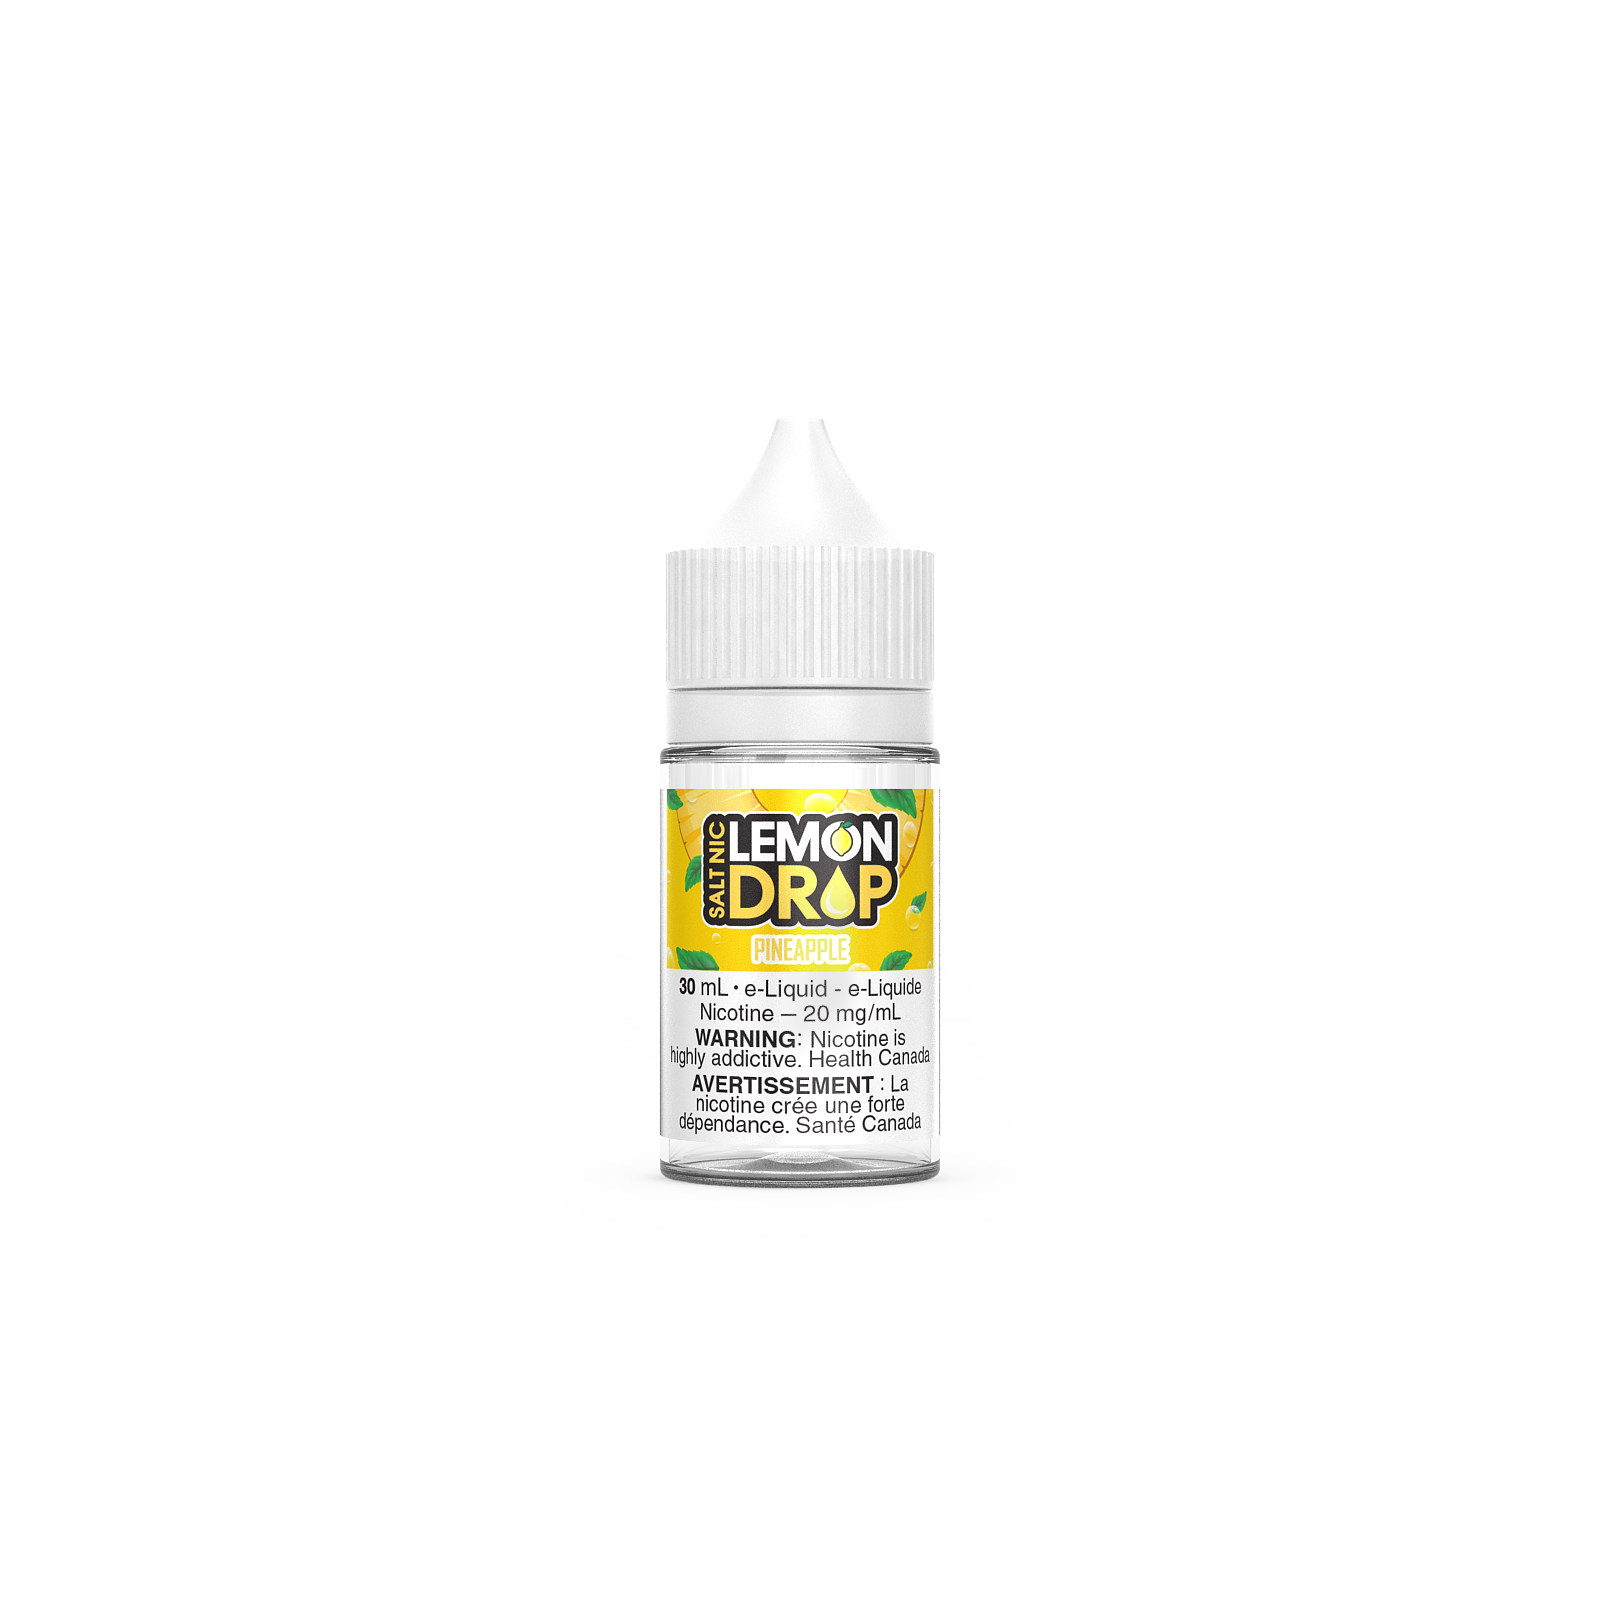 Lemon Drop - SALT - Pineapple - E-Liquid